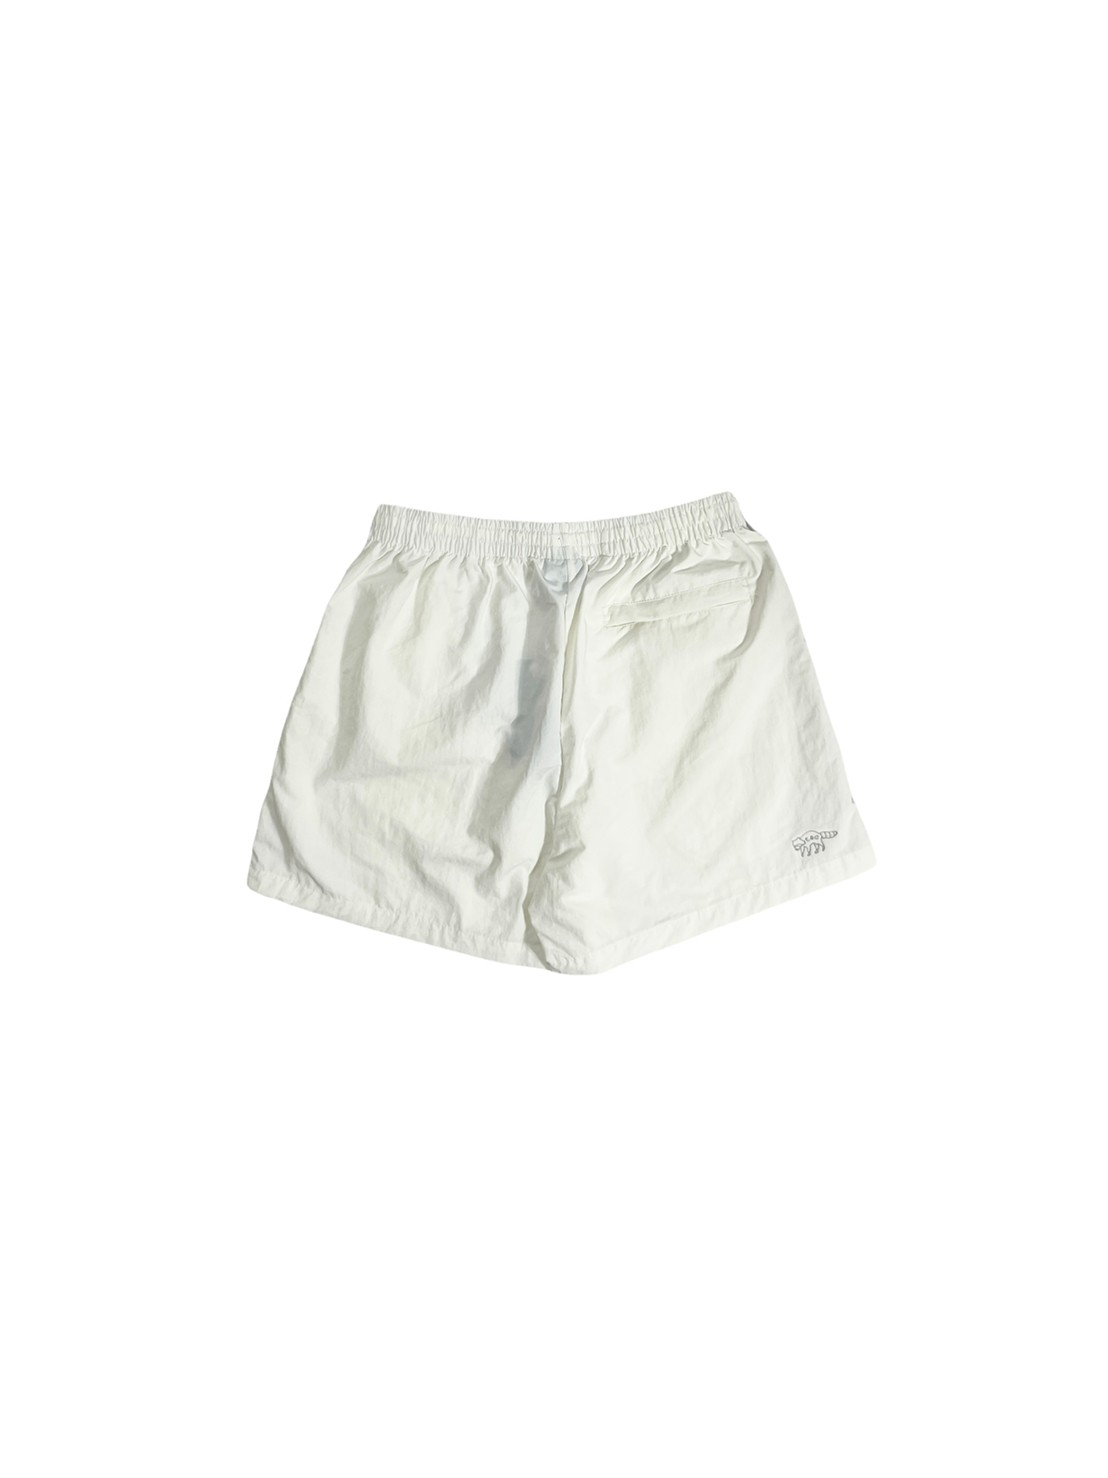 Nylon Outdoor Shorts (Off white)